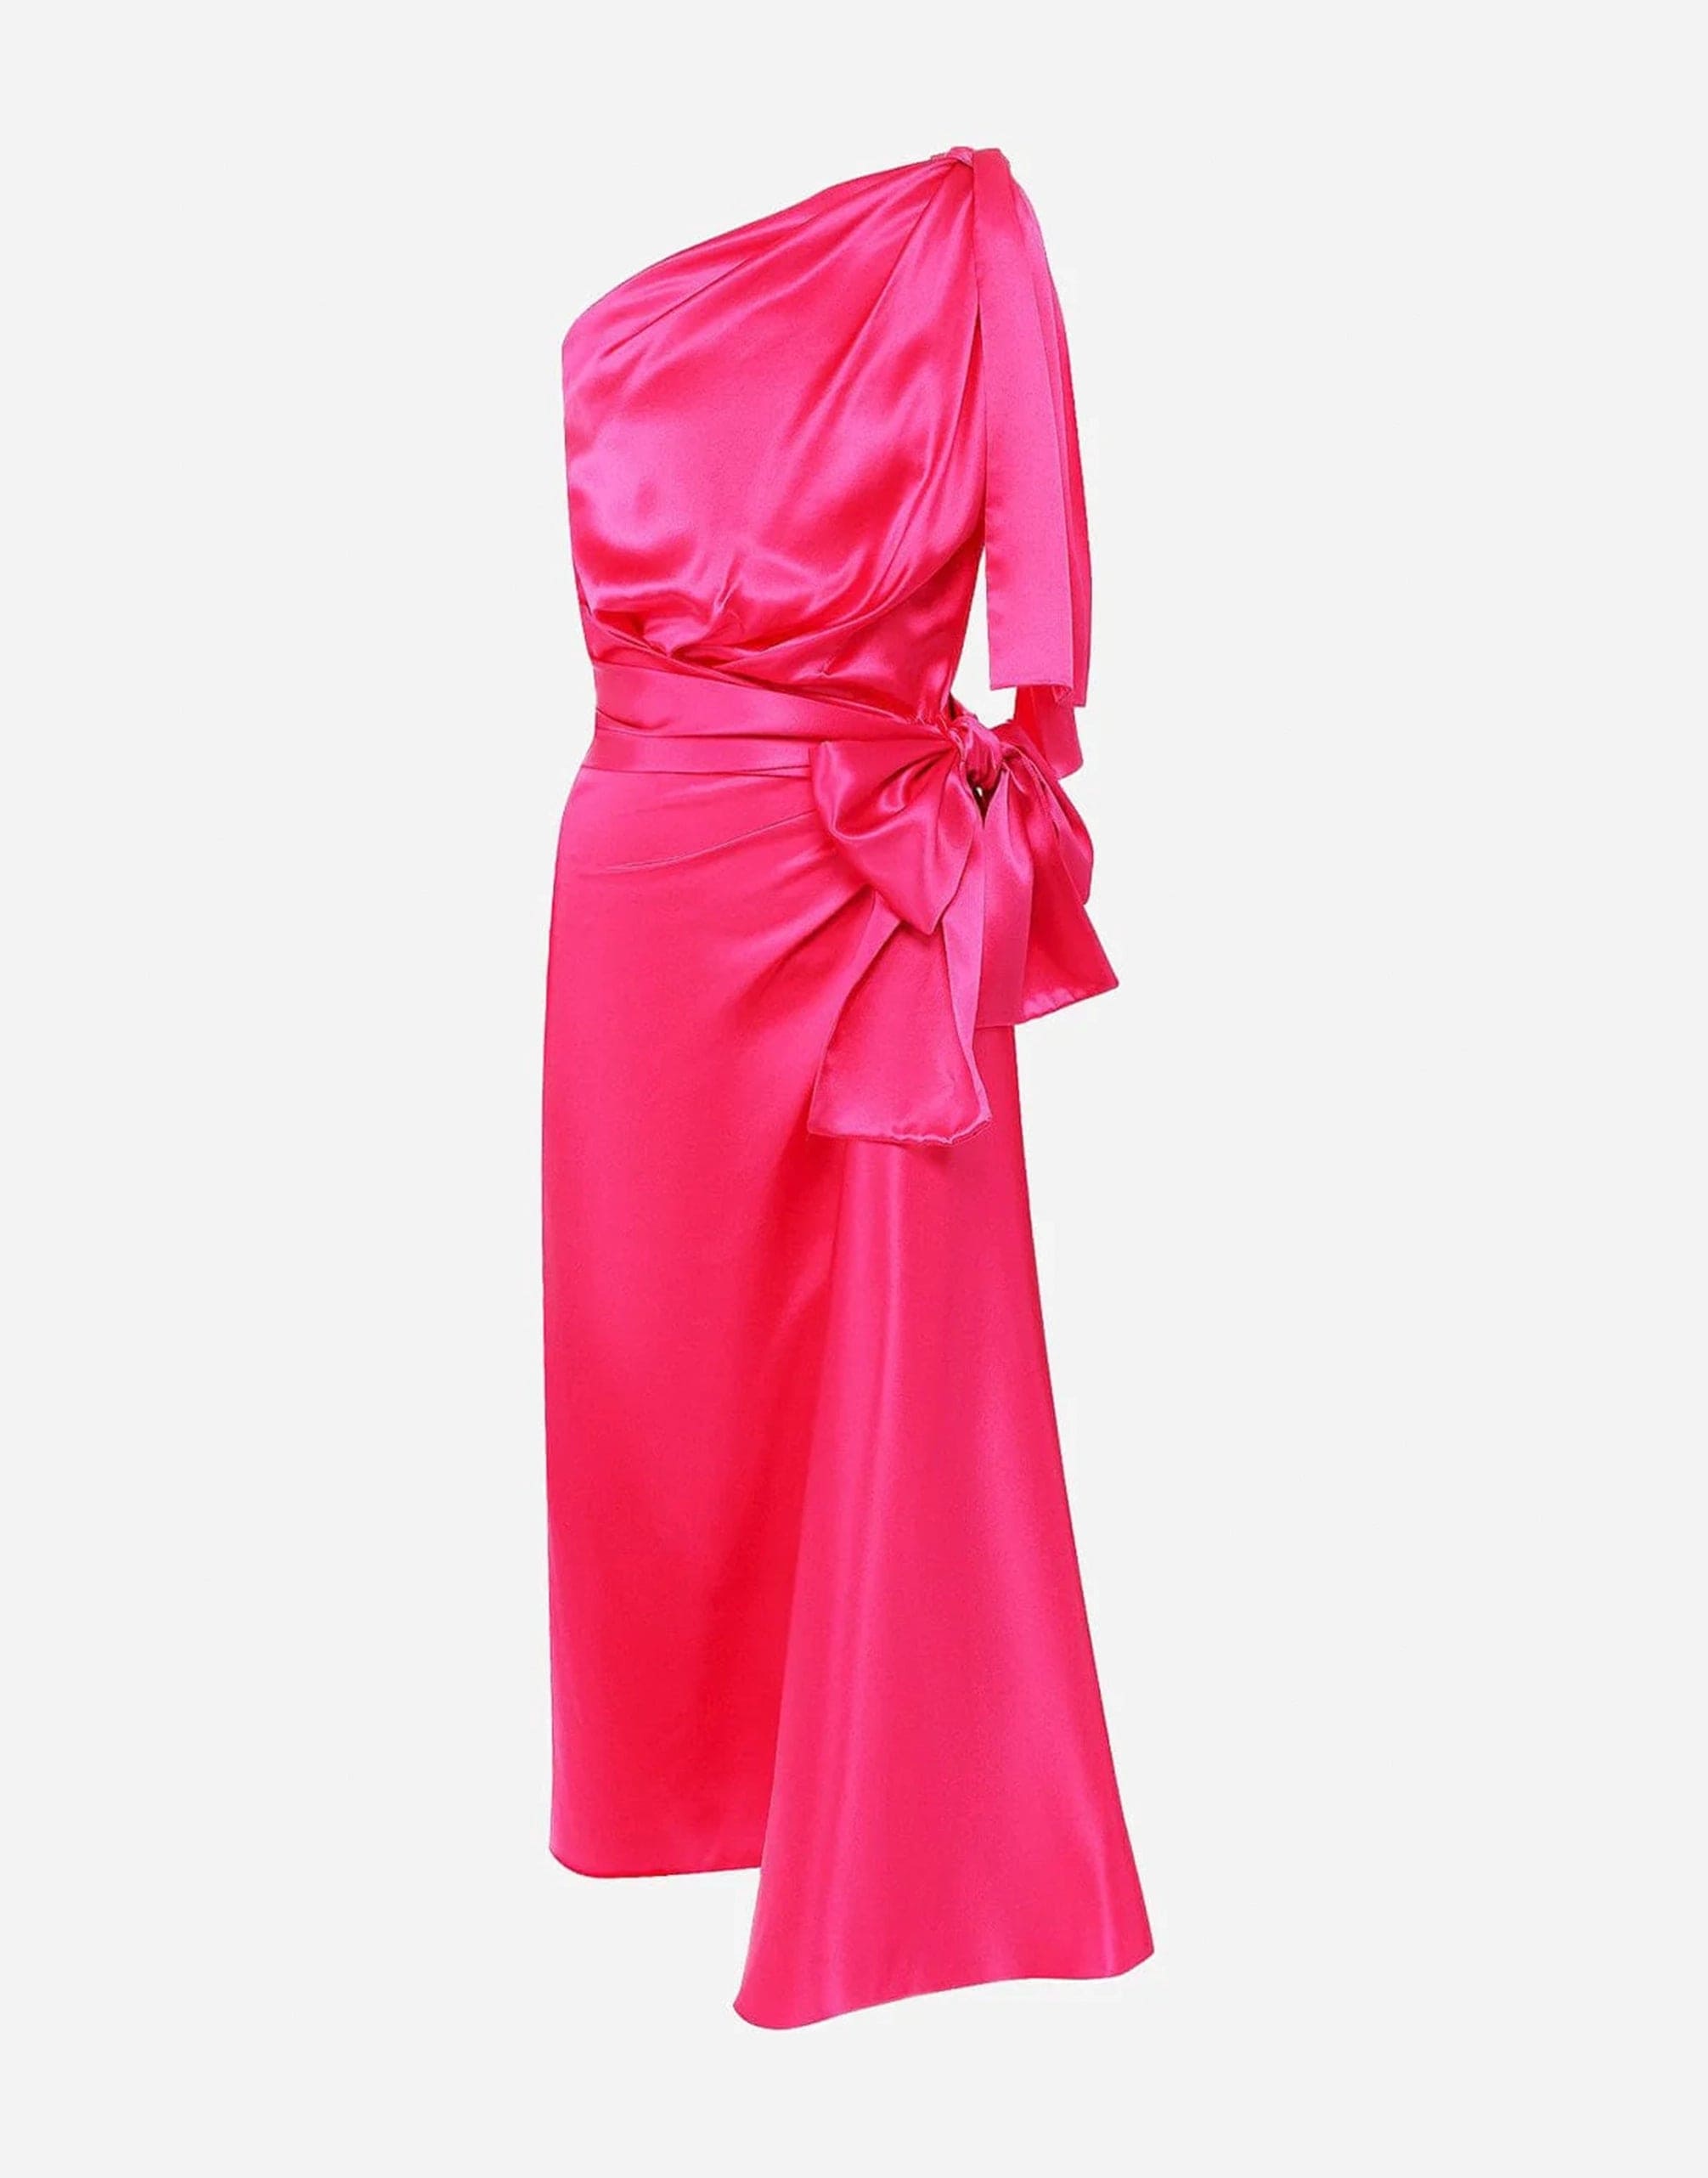 Dolce & Gabbana Silk-Taffeta One-Sleeve Ruched Cocktail Dress